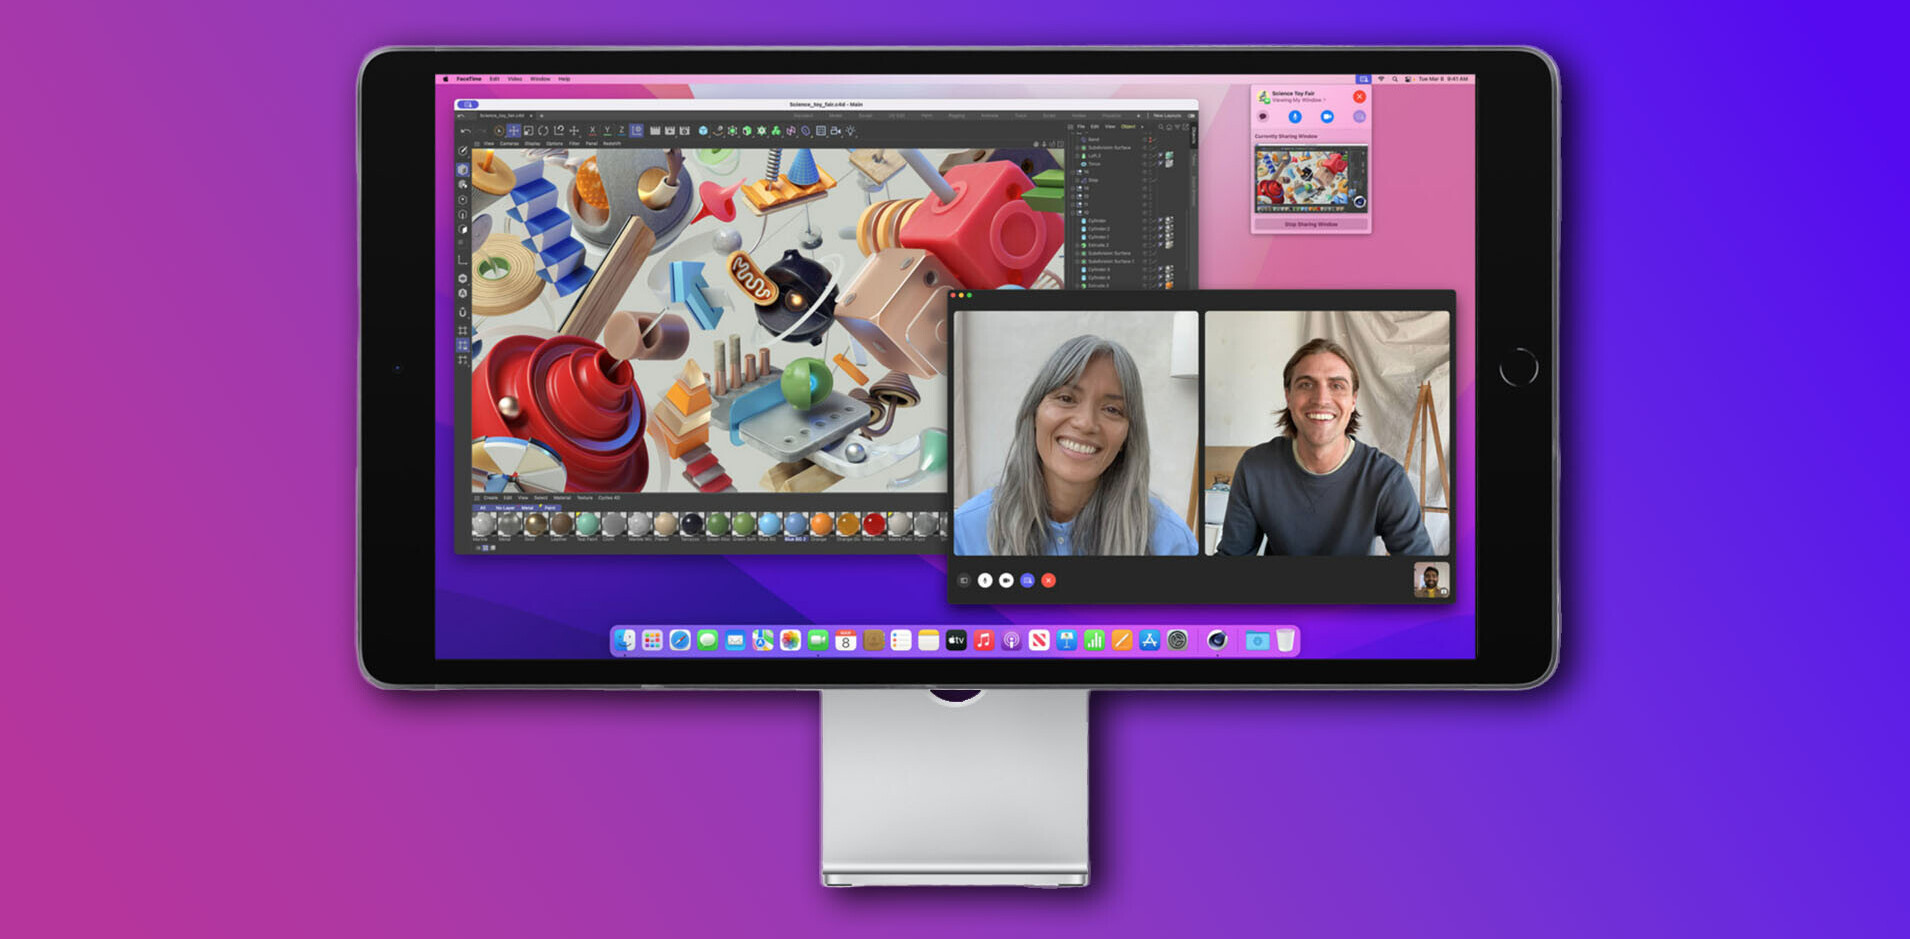 Why is Apple’s Studio Display basically a giant iPad?